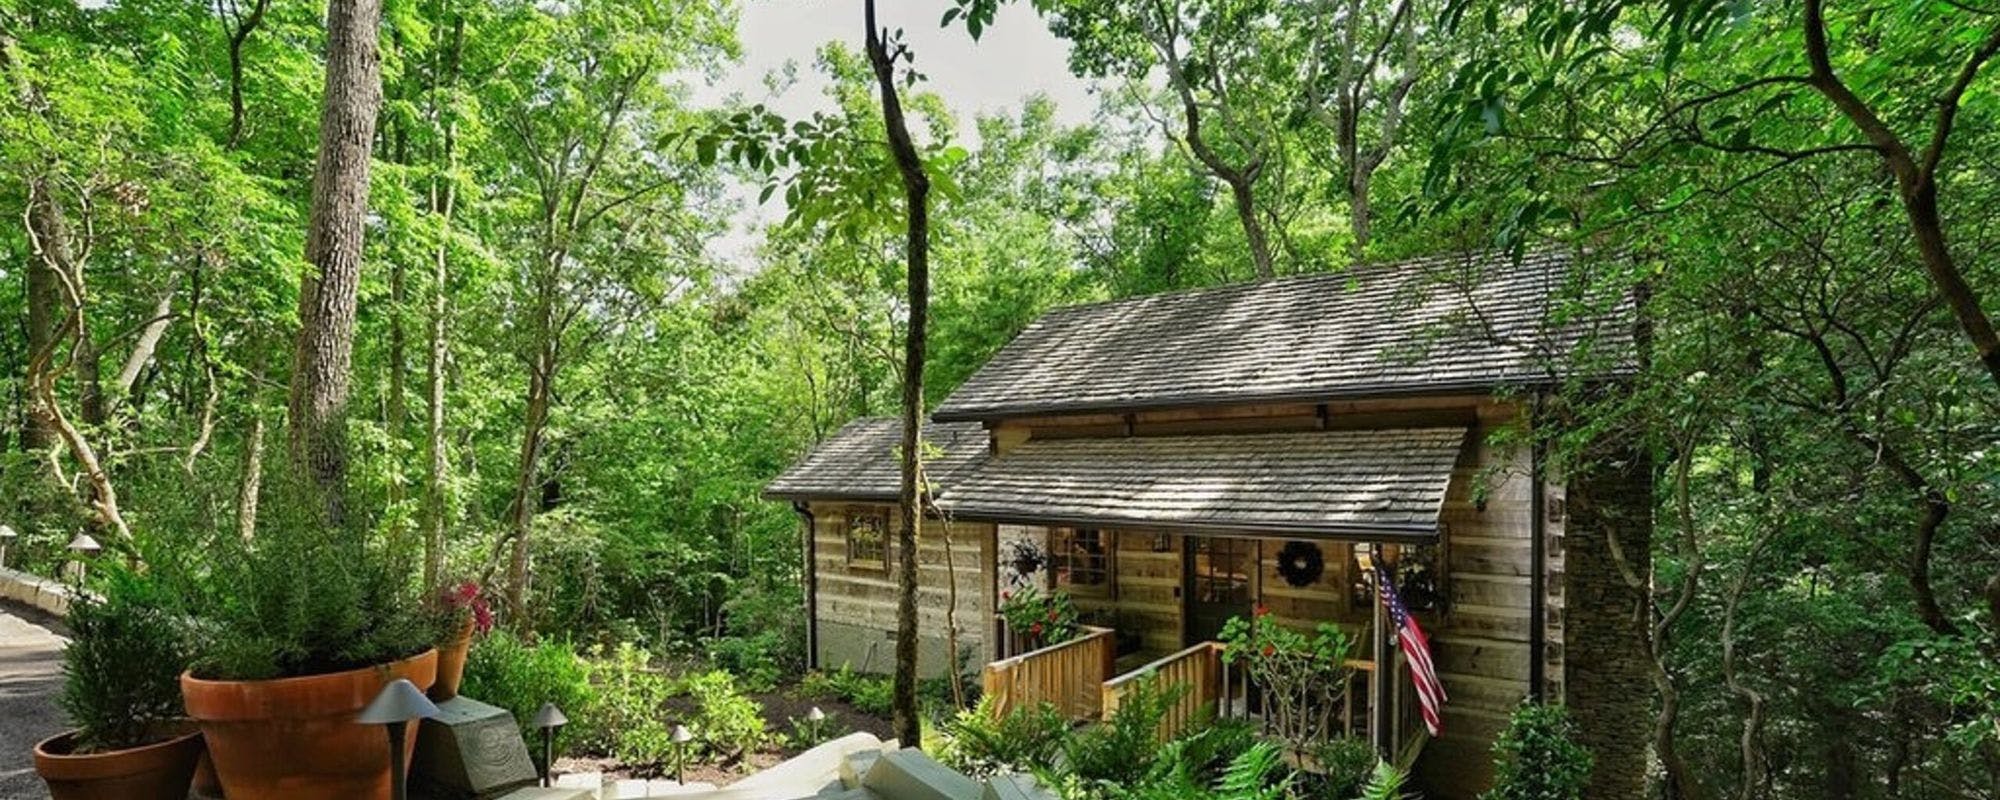 Vacation rental cabin in Big Canoe Georgia